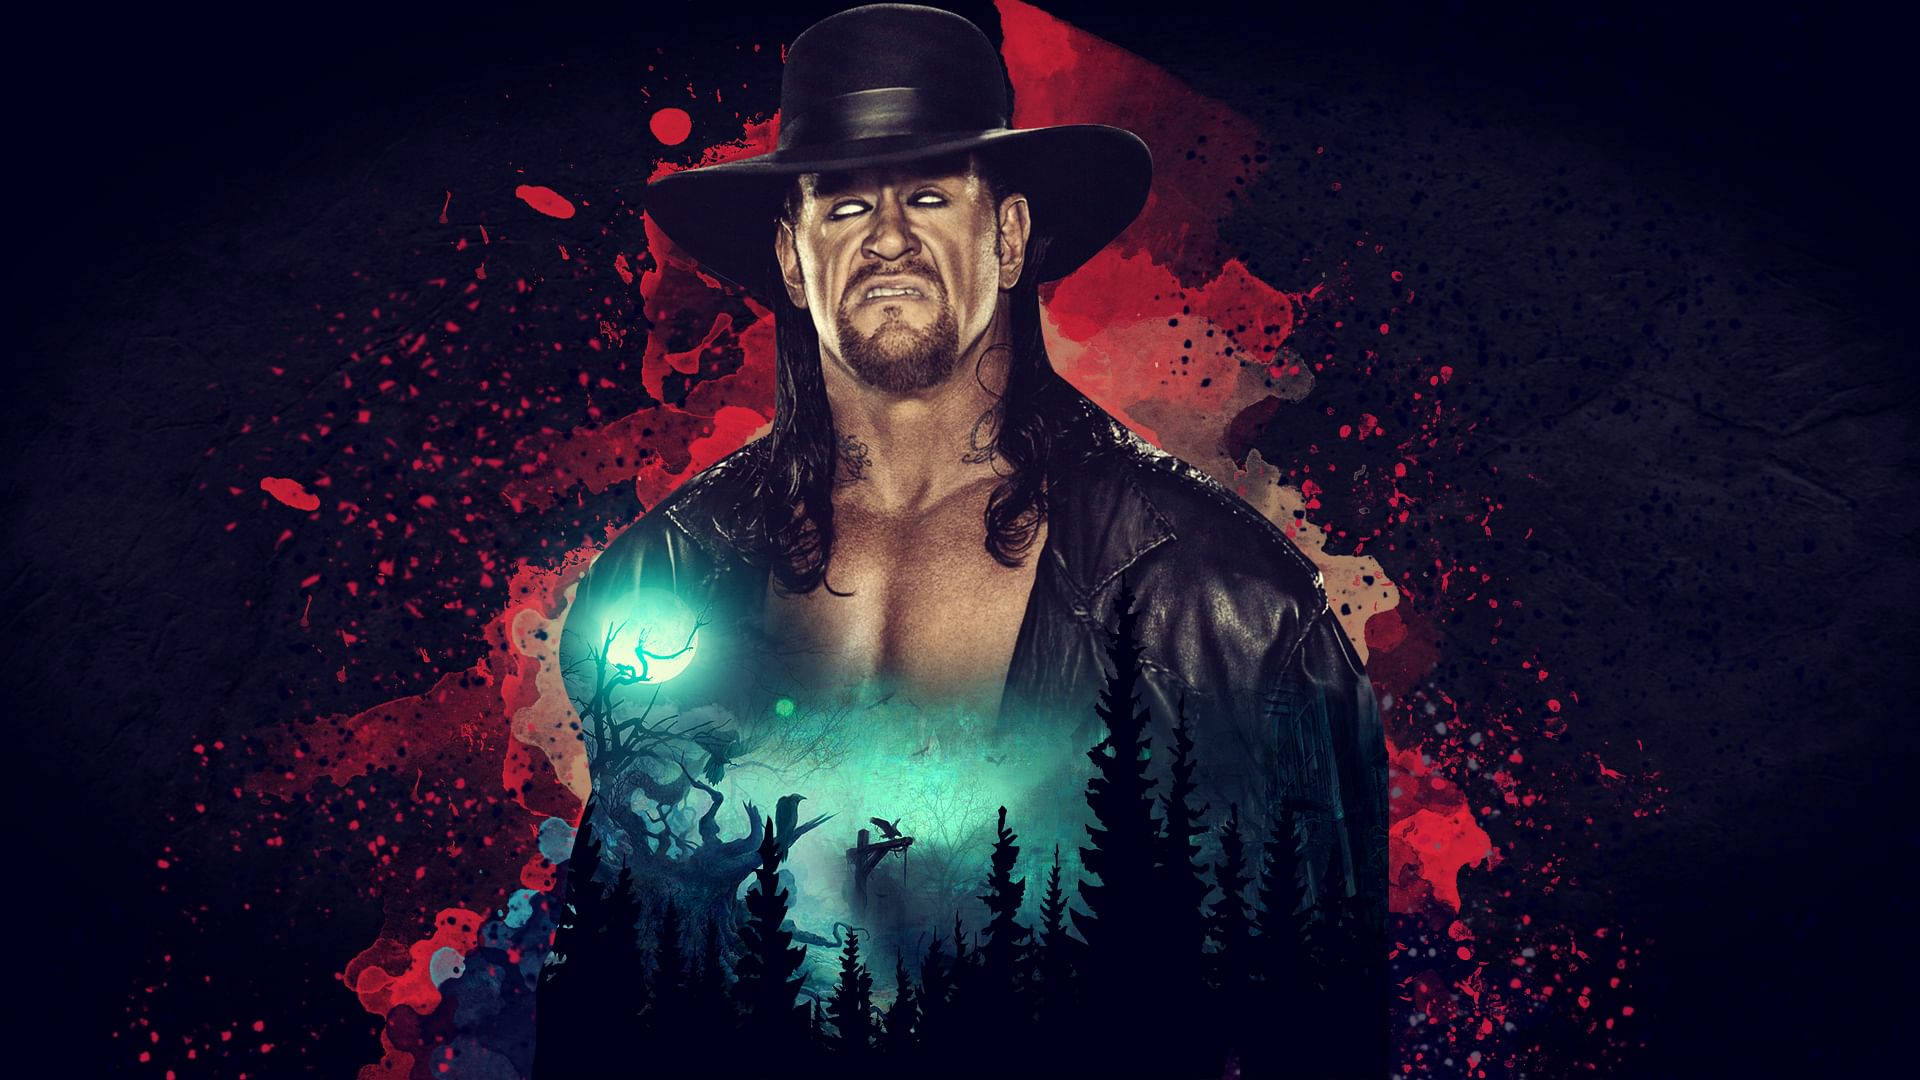 The Undertaker In Intense Digital Art Wallpaper